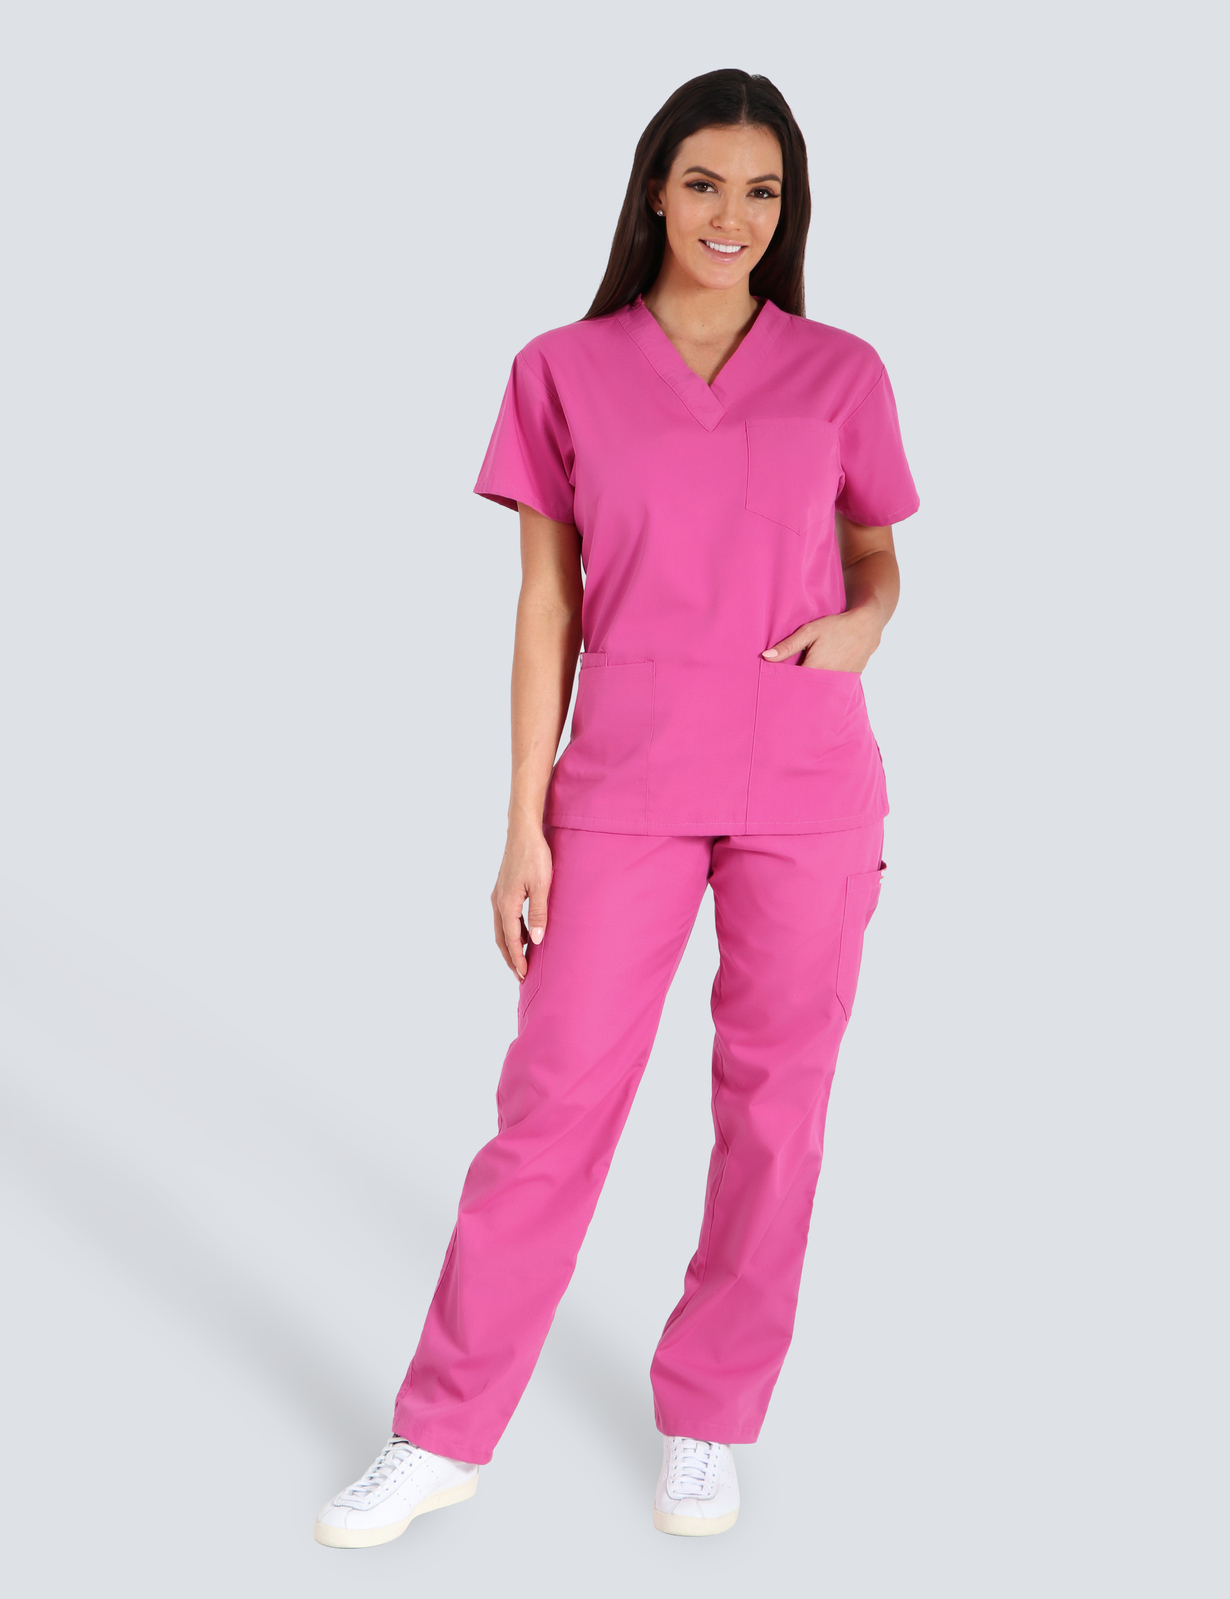 Melbourne Hospital - Wards CN (4 Pocket Scrub Top and Cargo Pants